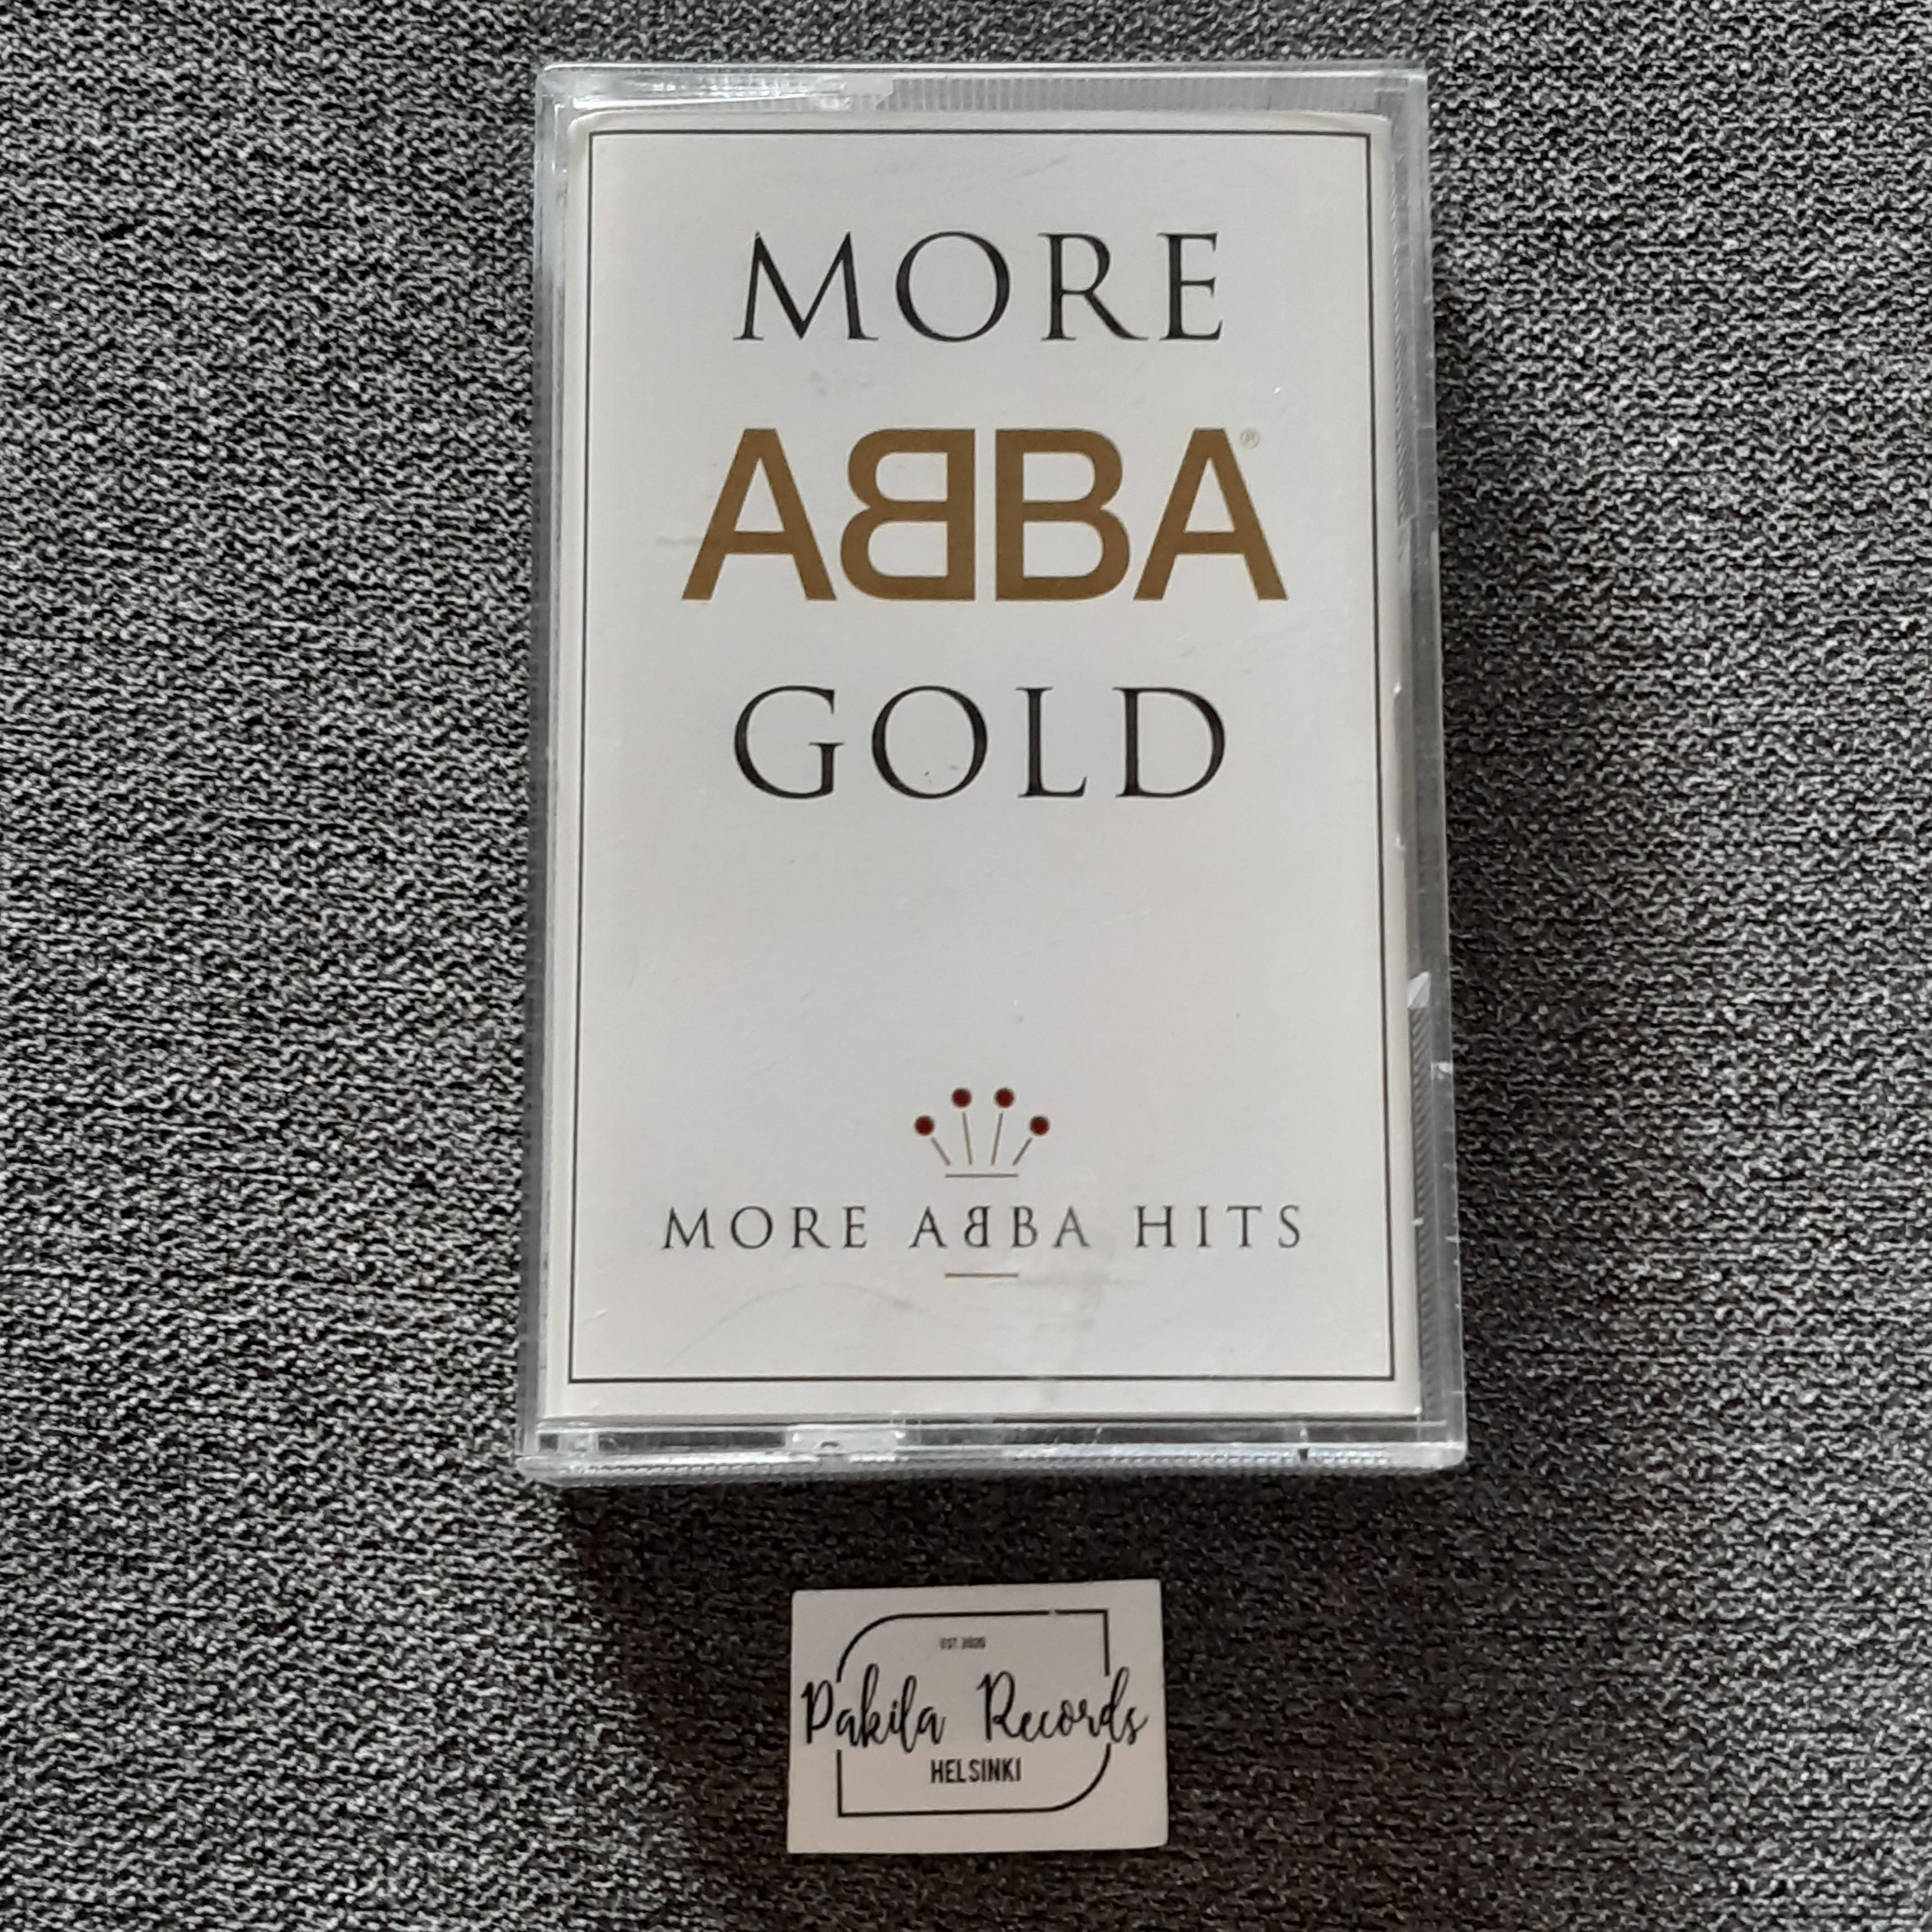 Abba - More Abba Gold (More Abba Hits) - Kasetti (käytetty)